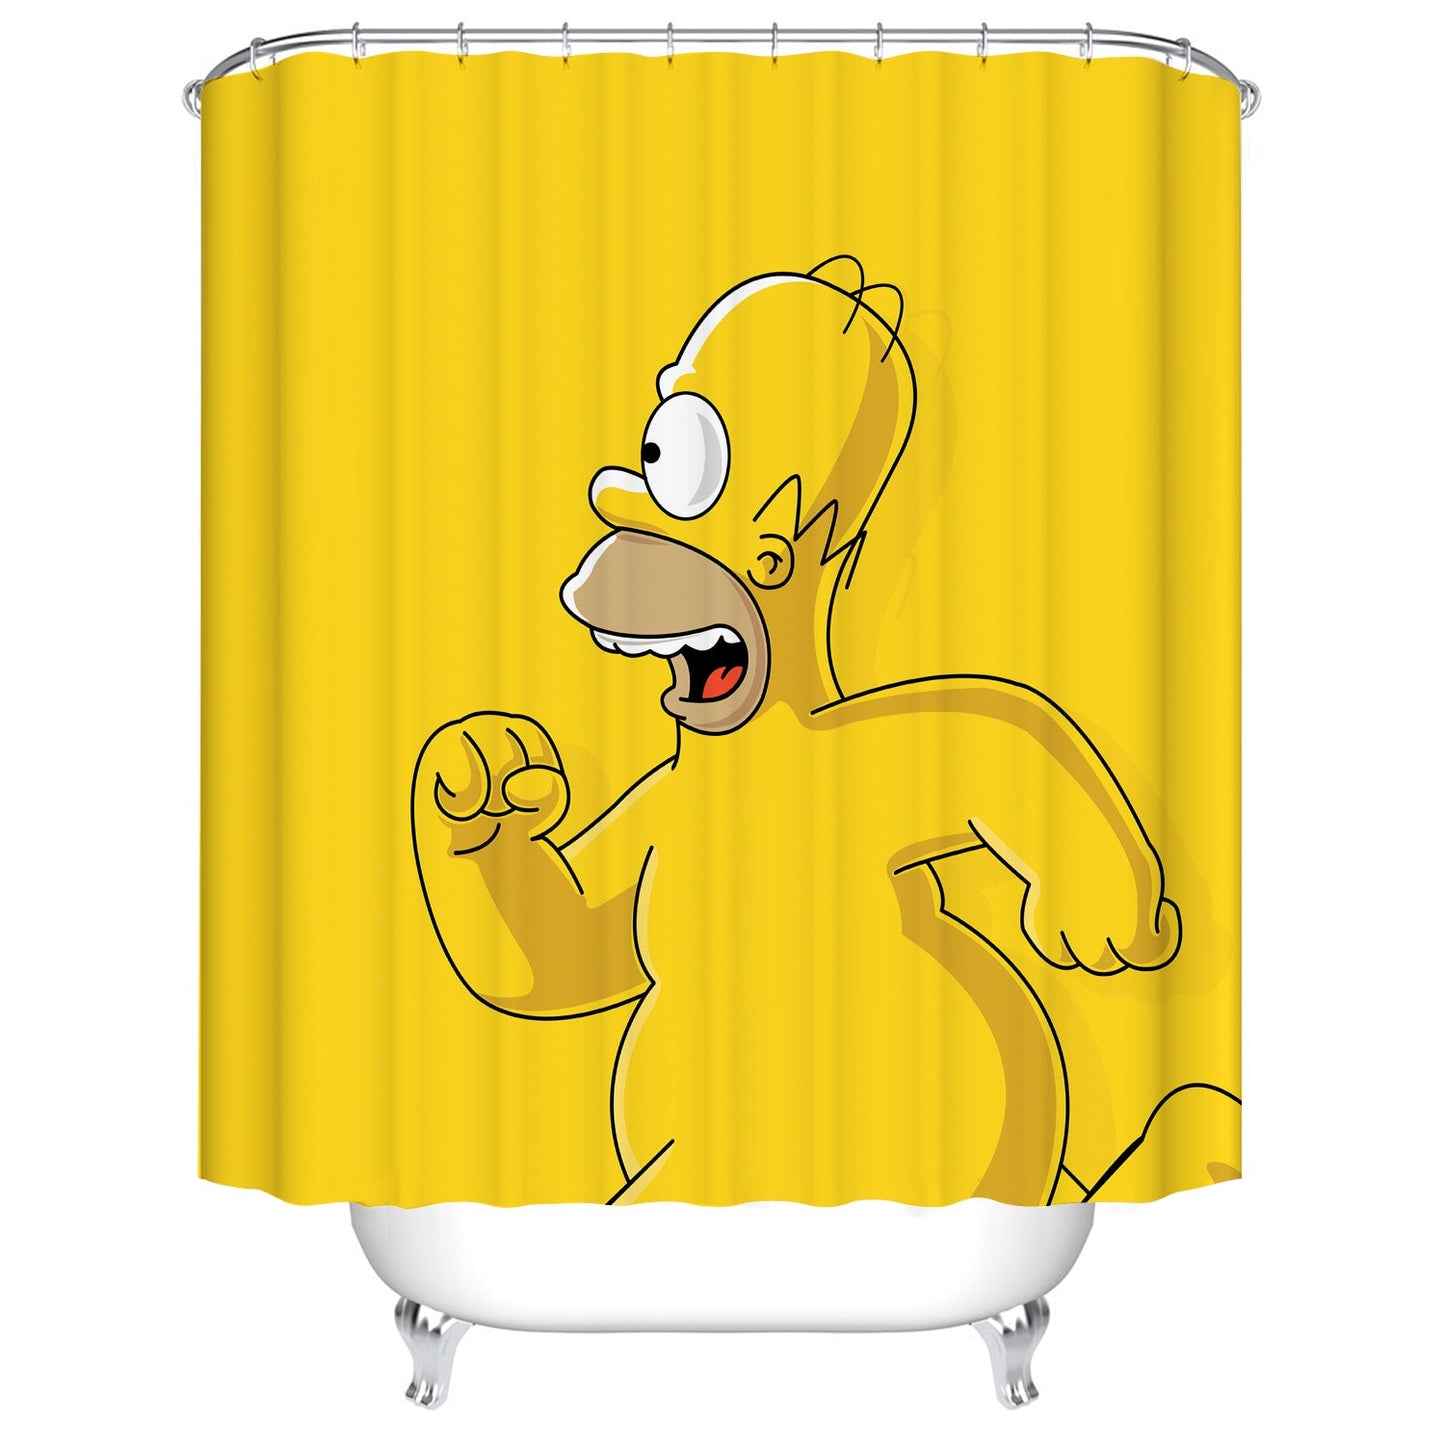 Running Homer The Simpsons Shower Curtain